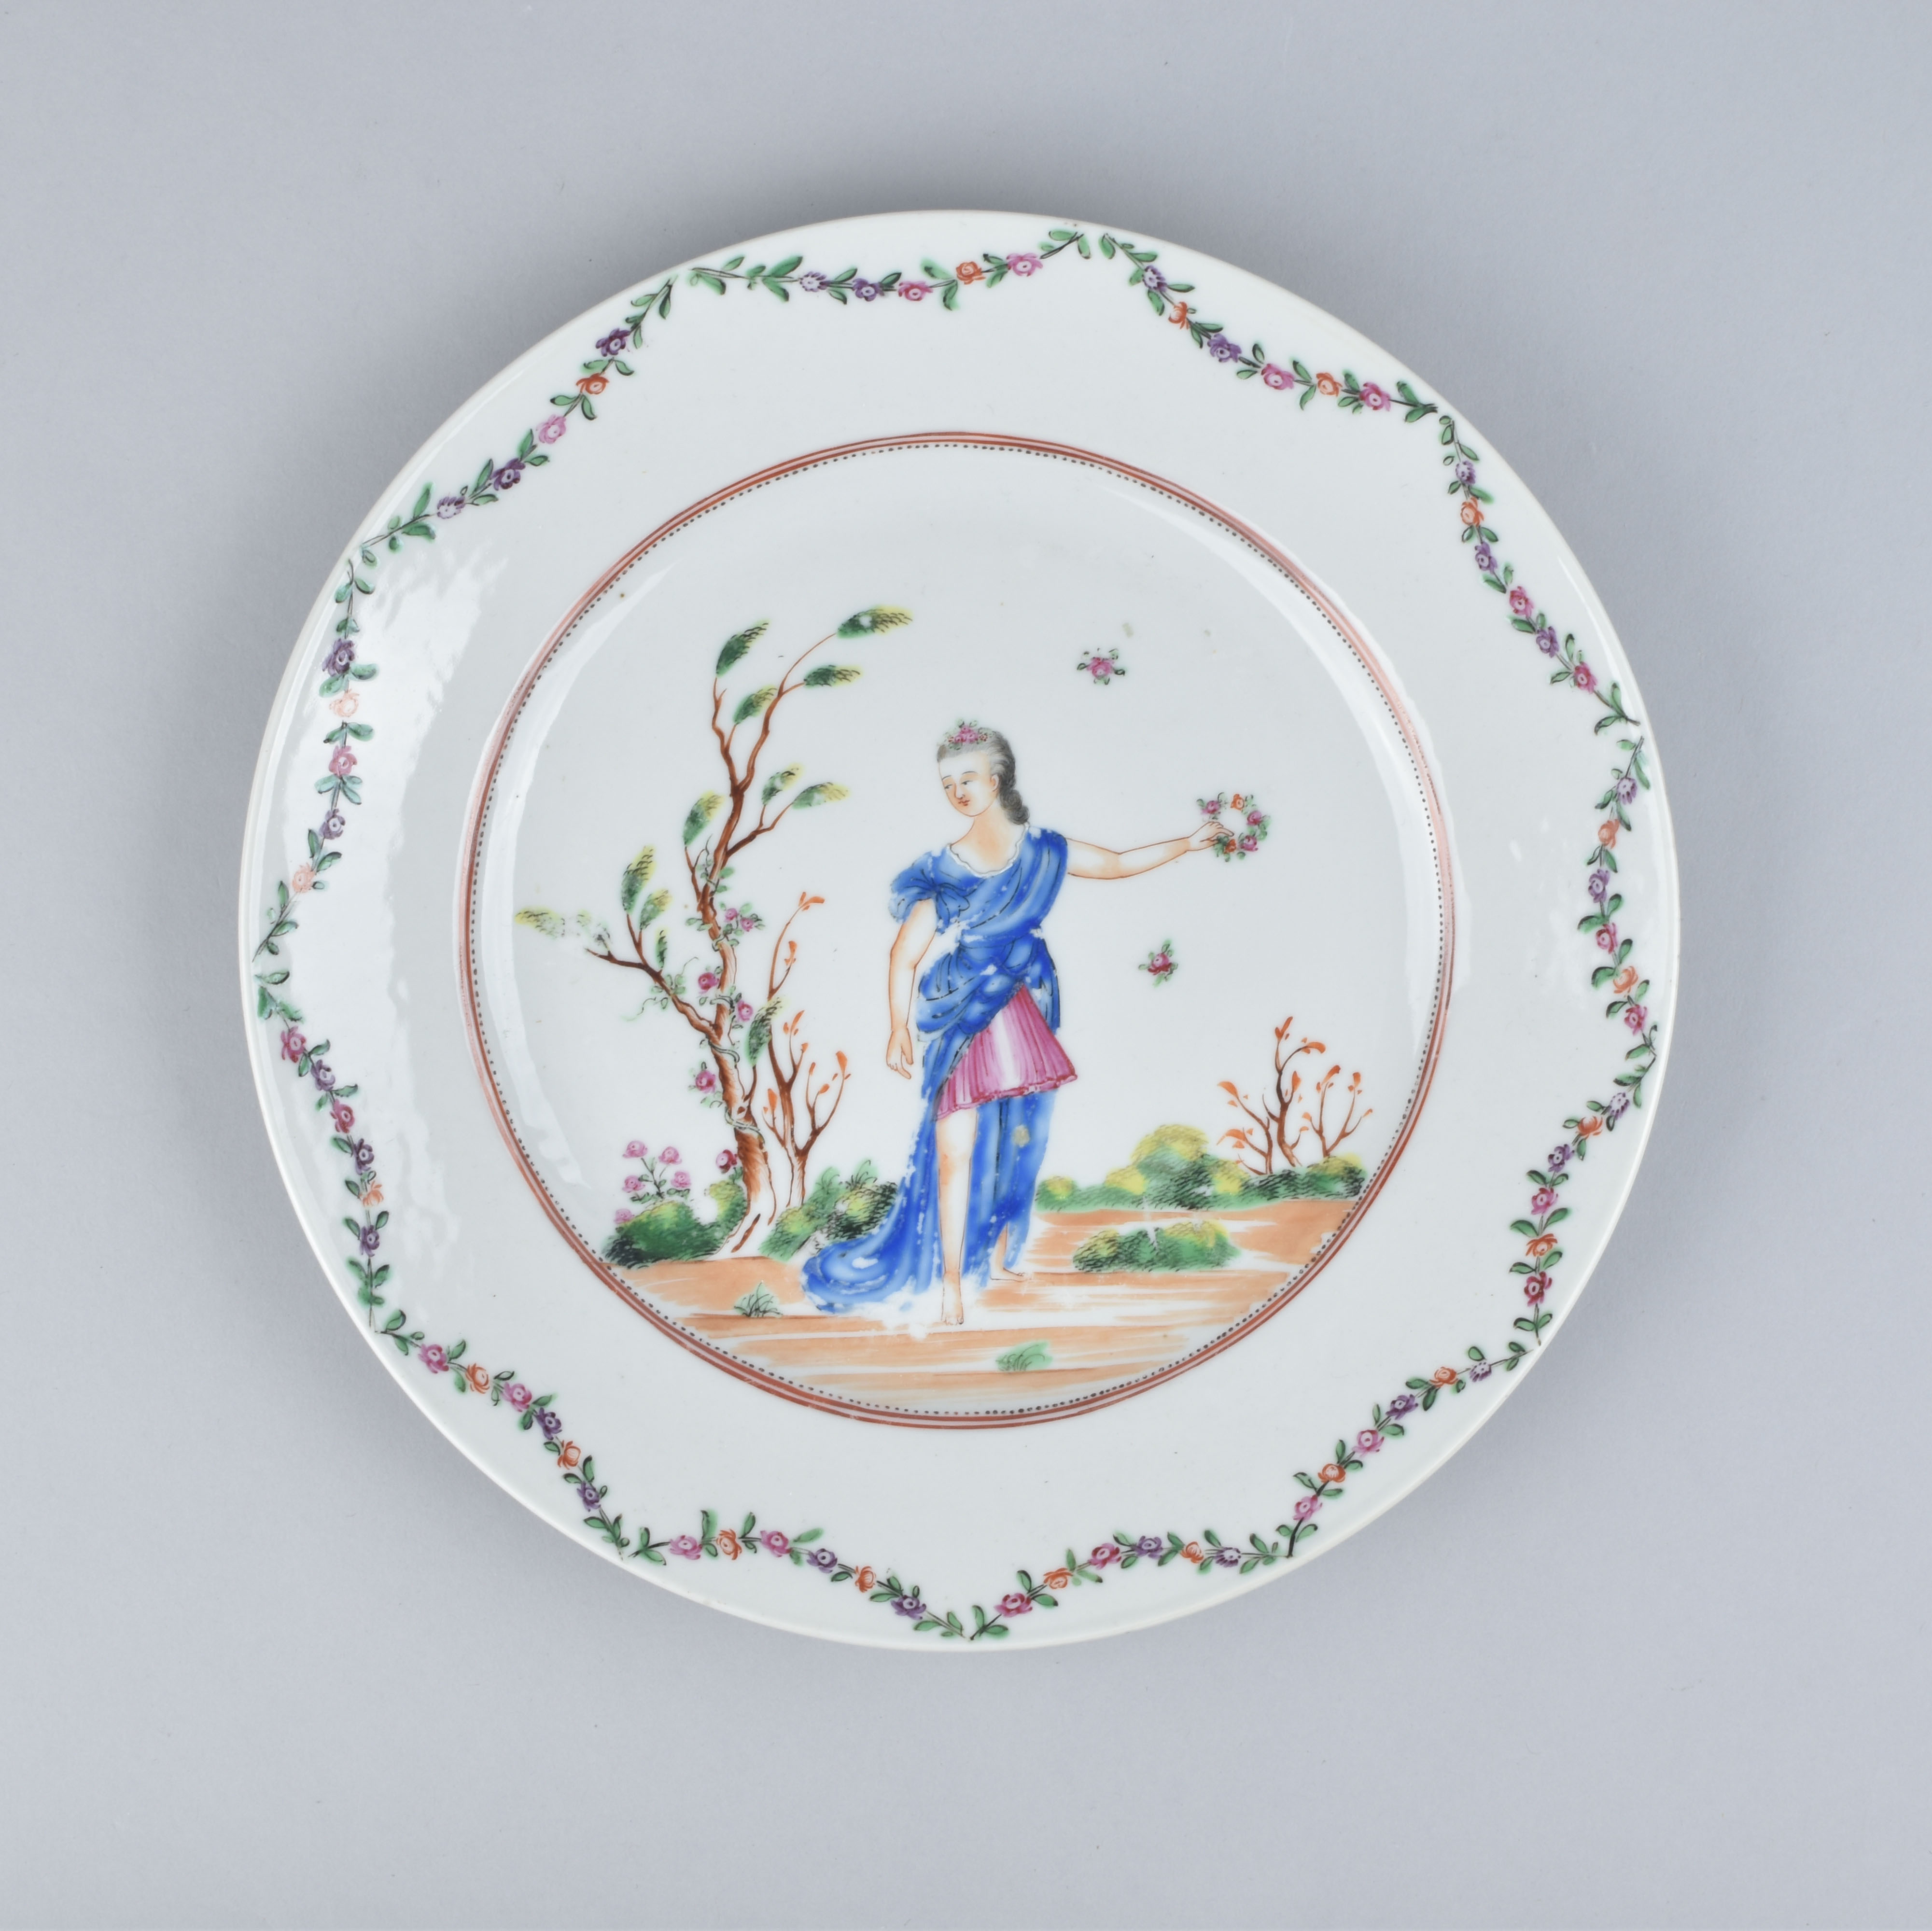 Porcelaine Qianlong (1736-1795), ca. 1775, Chine